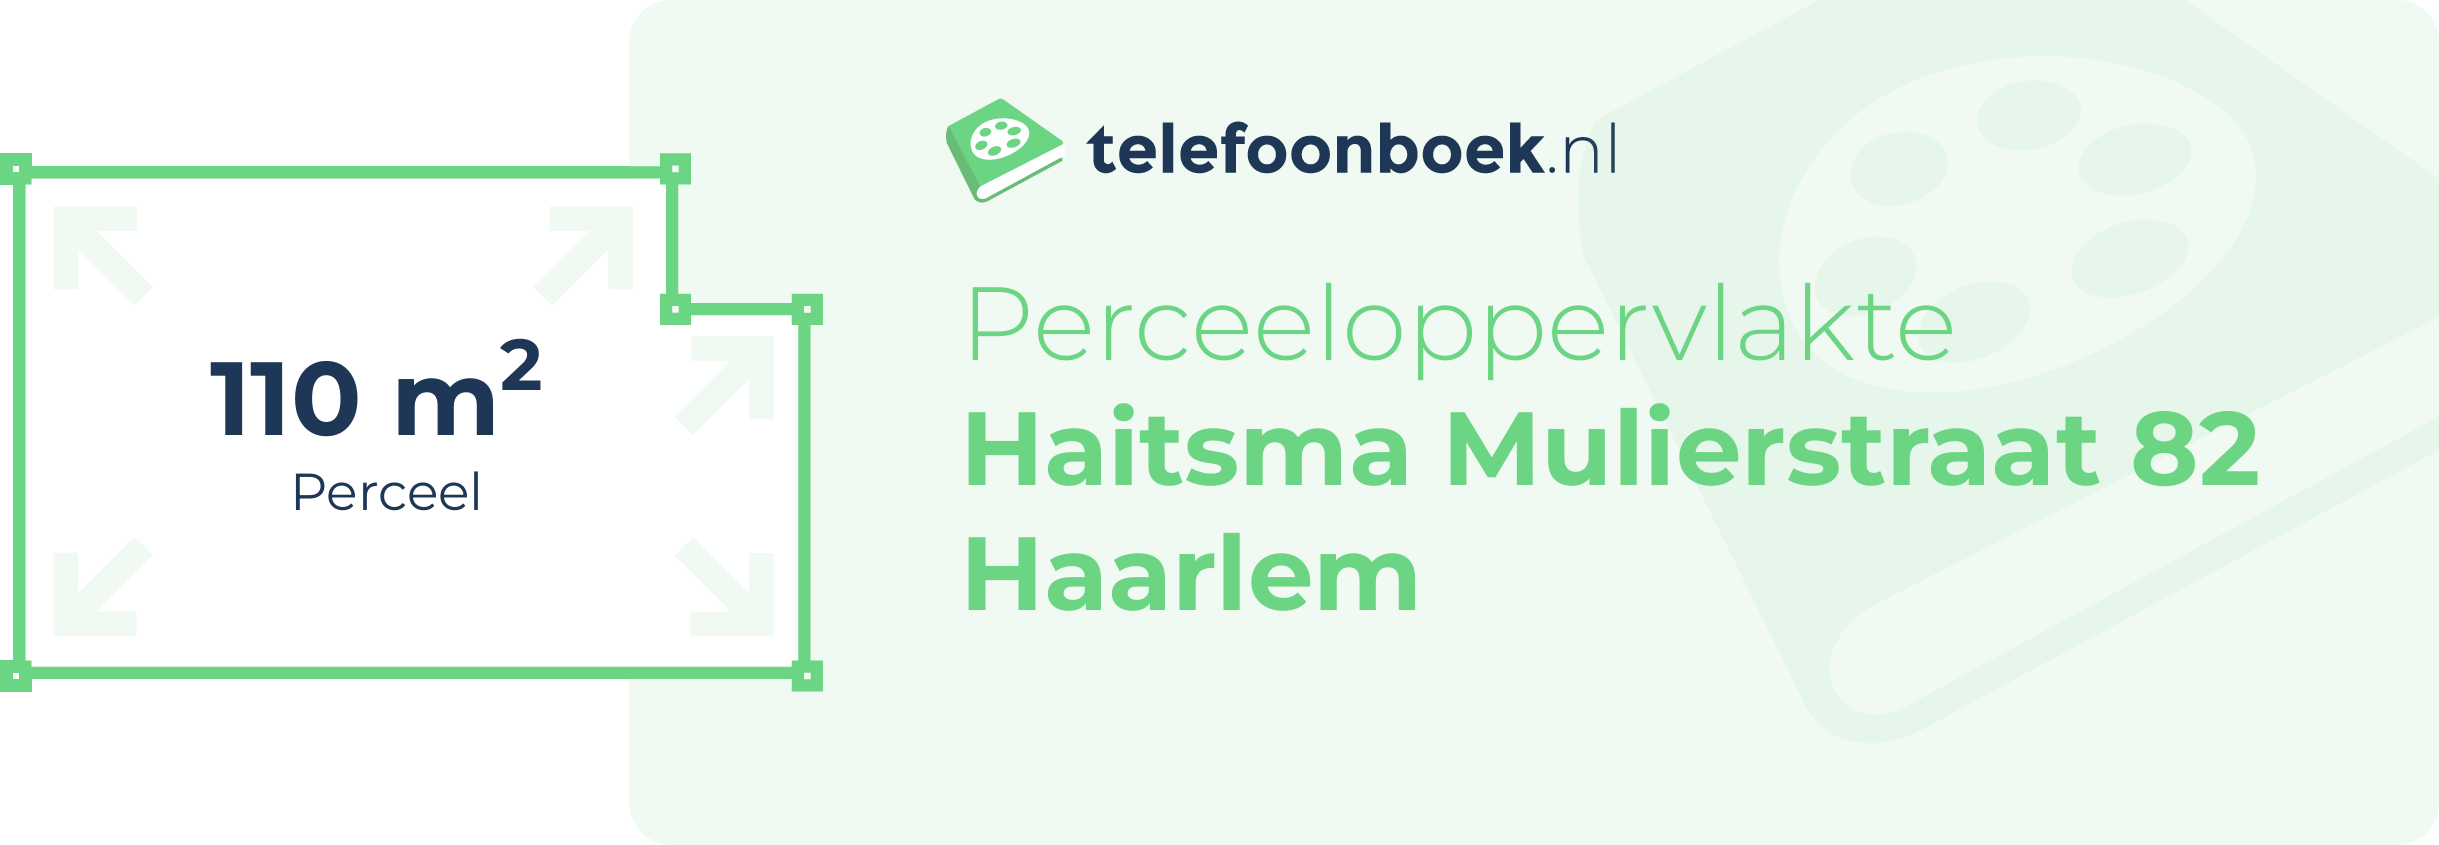 Perceeloppervlakte Haitsma Mulierstraat 82 Haarlem